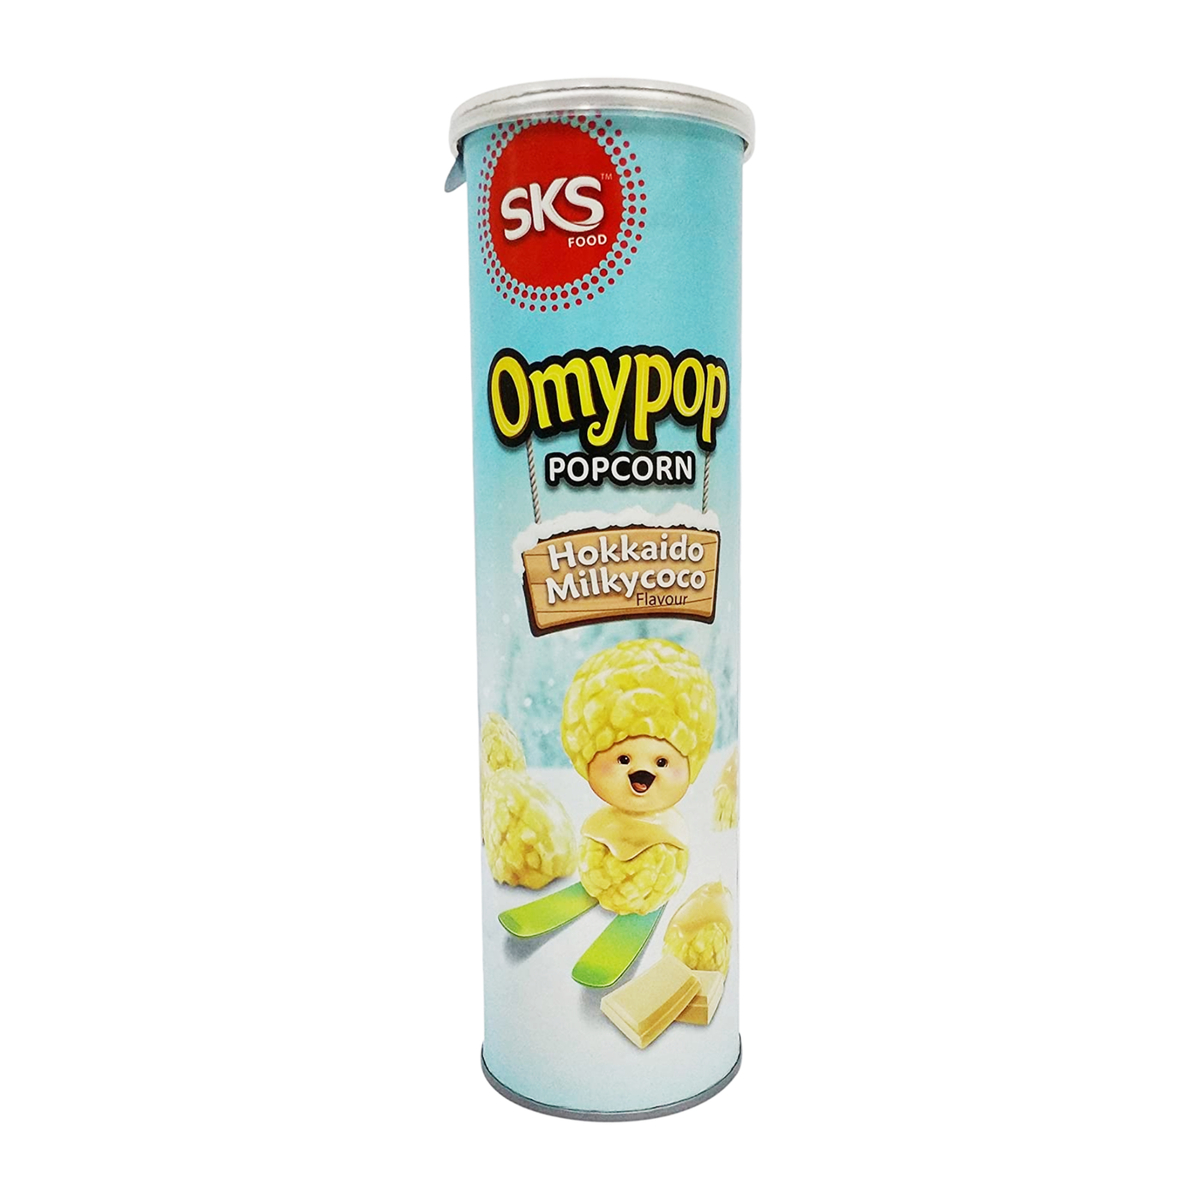 Sks Omypop Popcorn Hokaido Milkycoco 85g